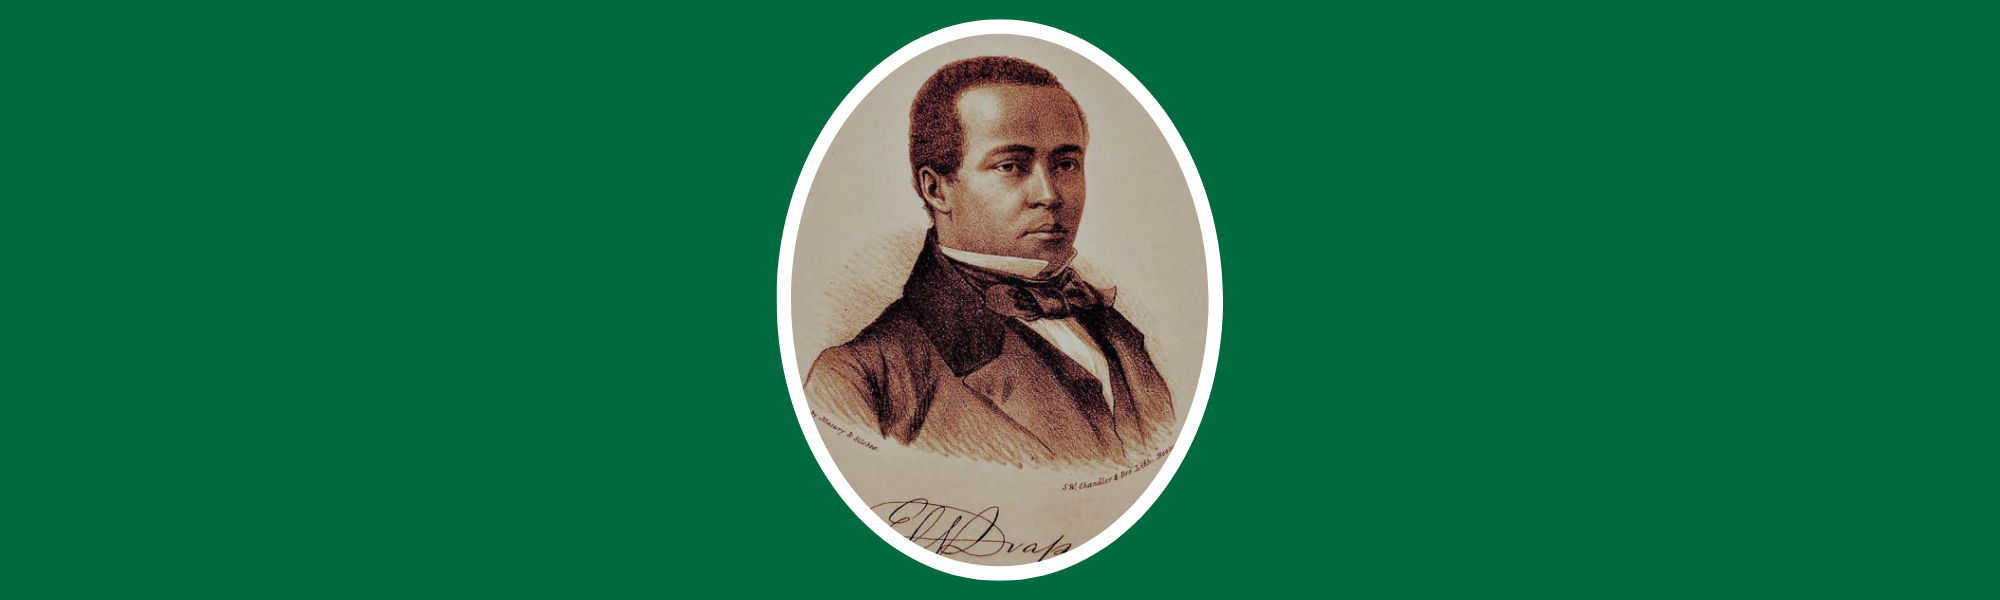 A portrait of Edward Garrison Draper 1855 on a Dartmouth green background